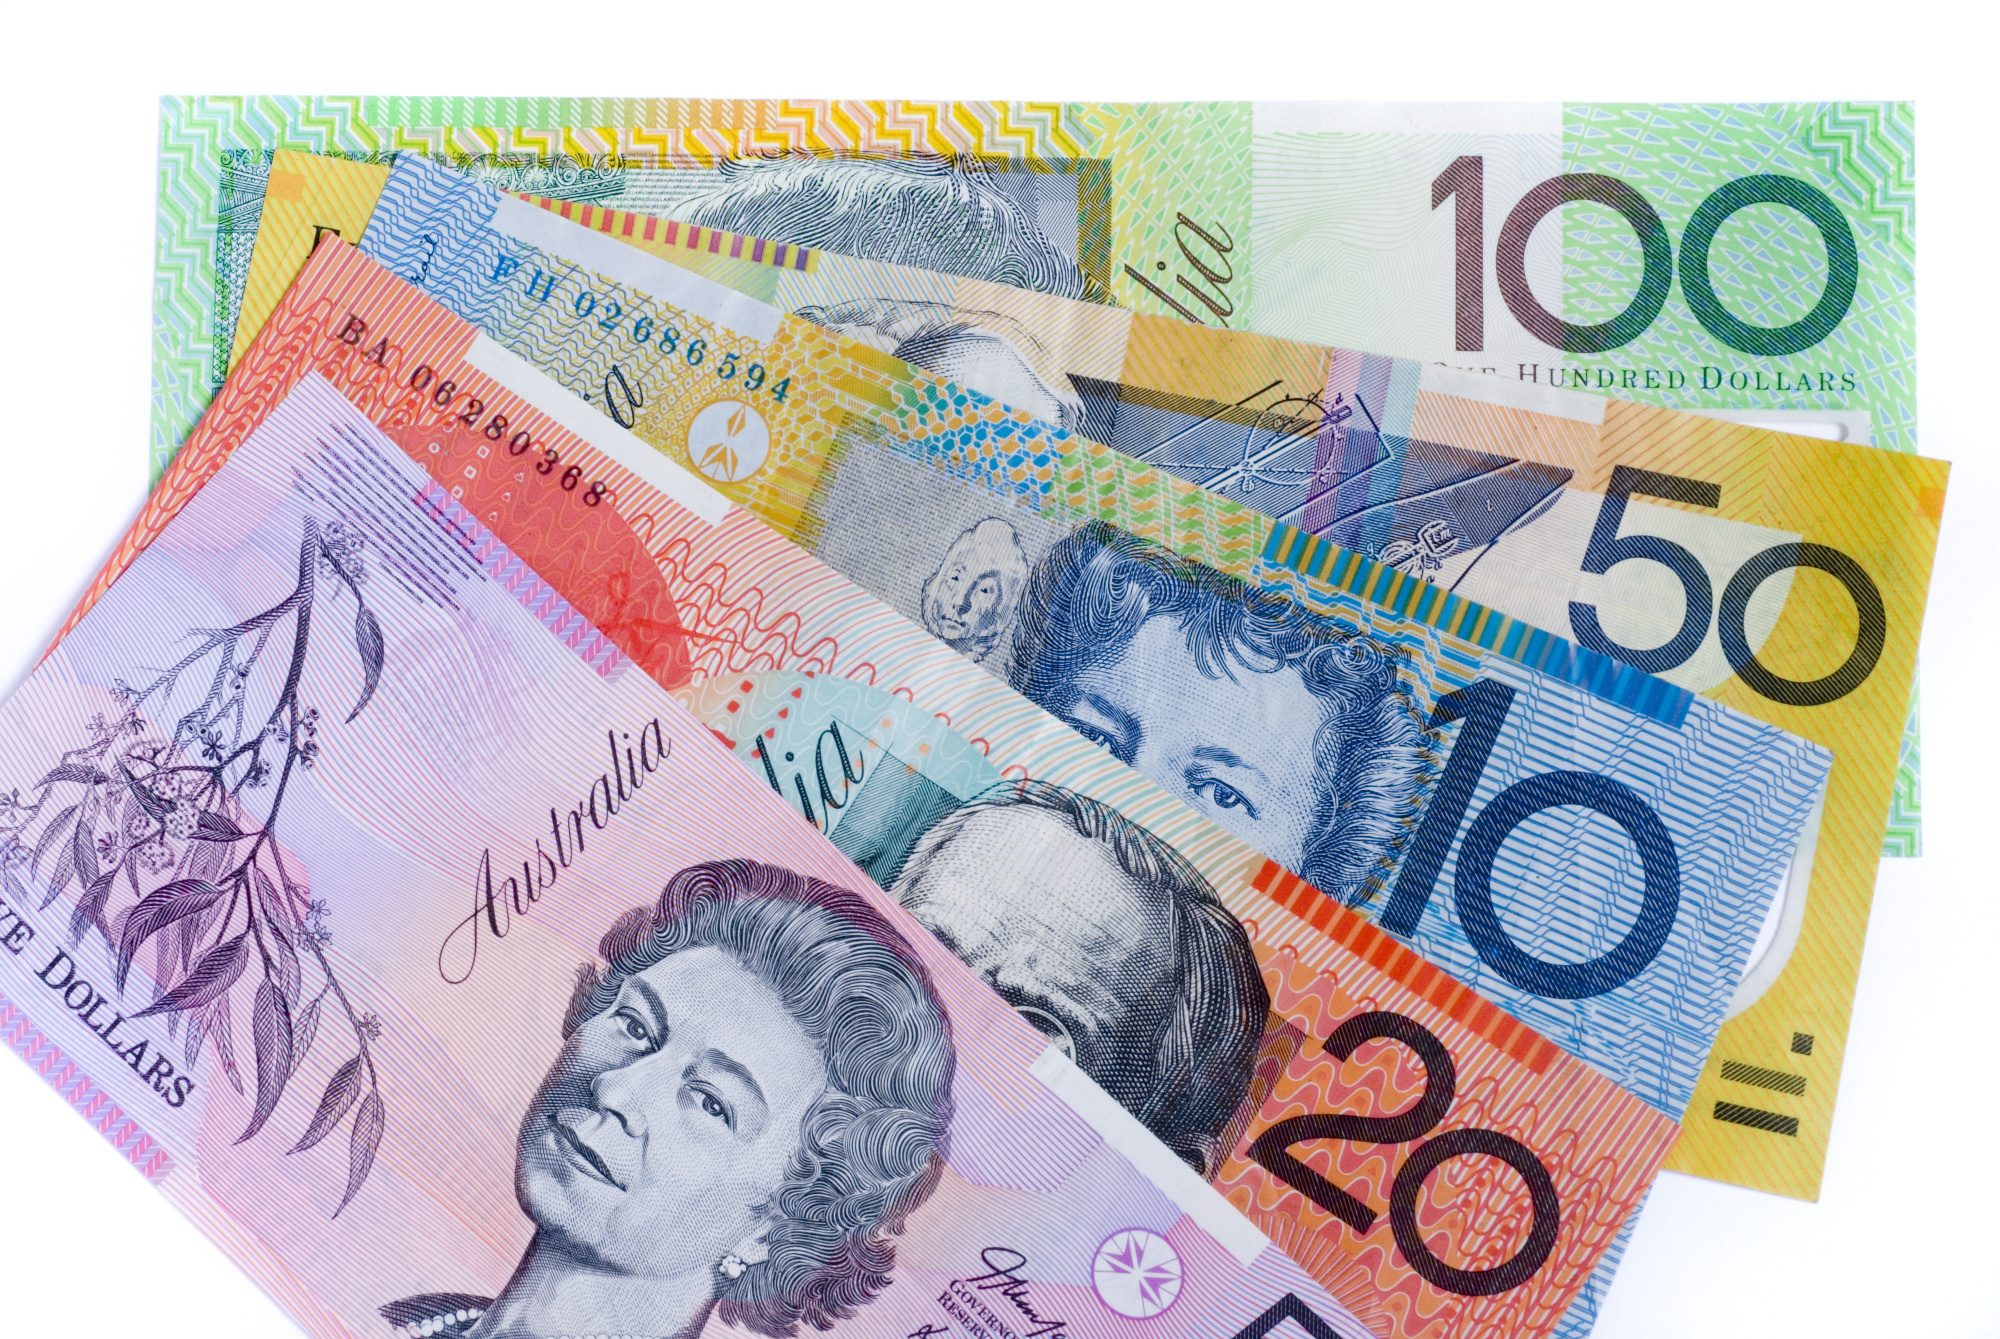 Only 8.4 AUD – Australian Dollars To Obtain Vietnam Visa